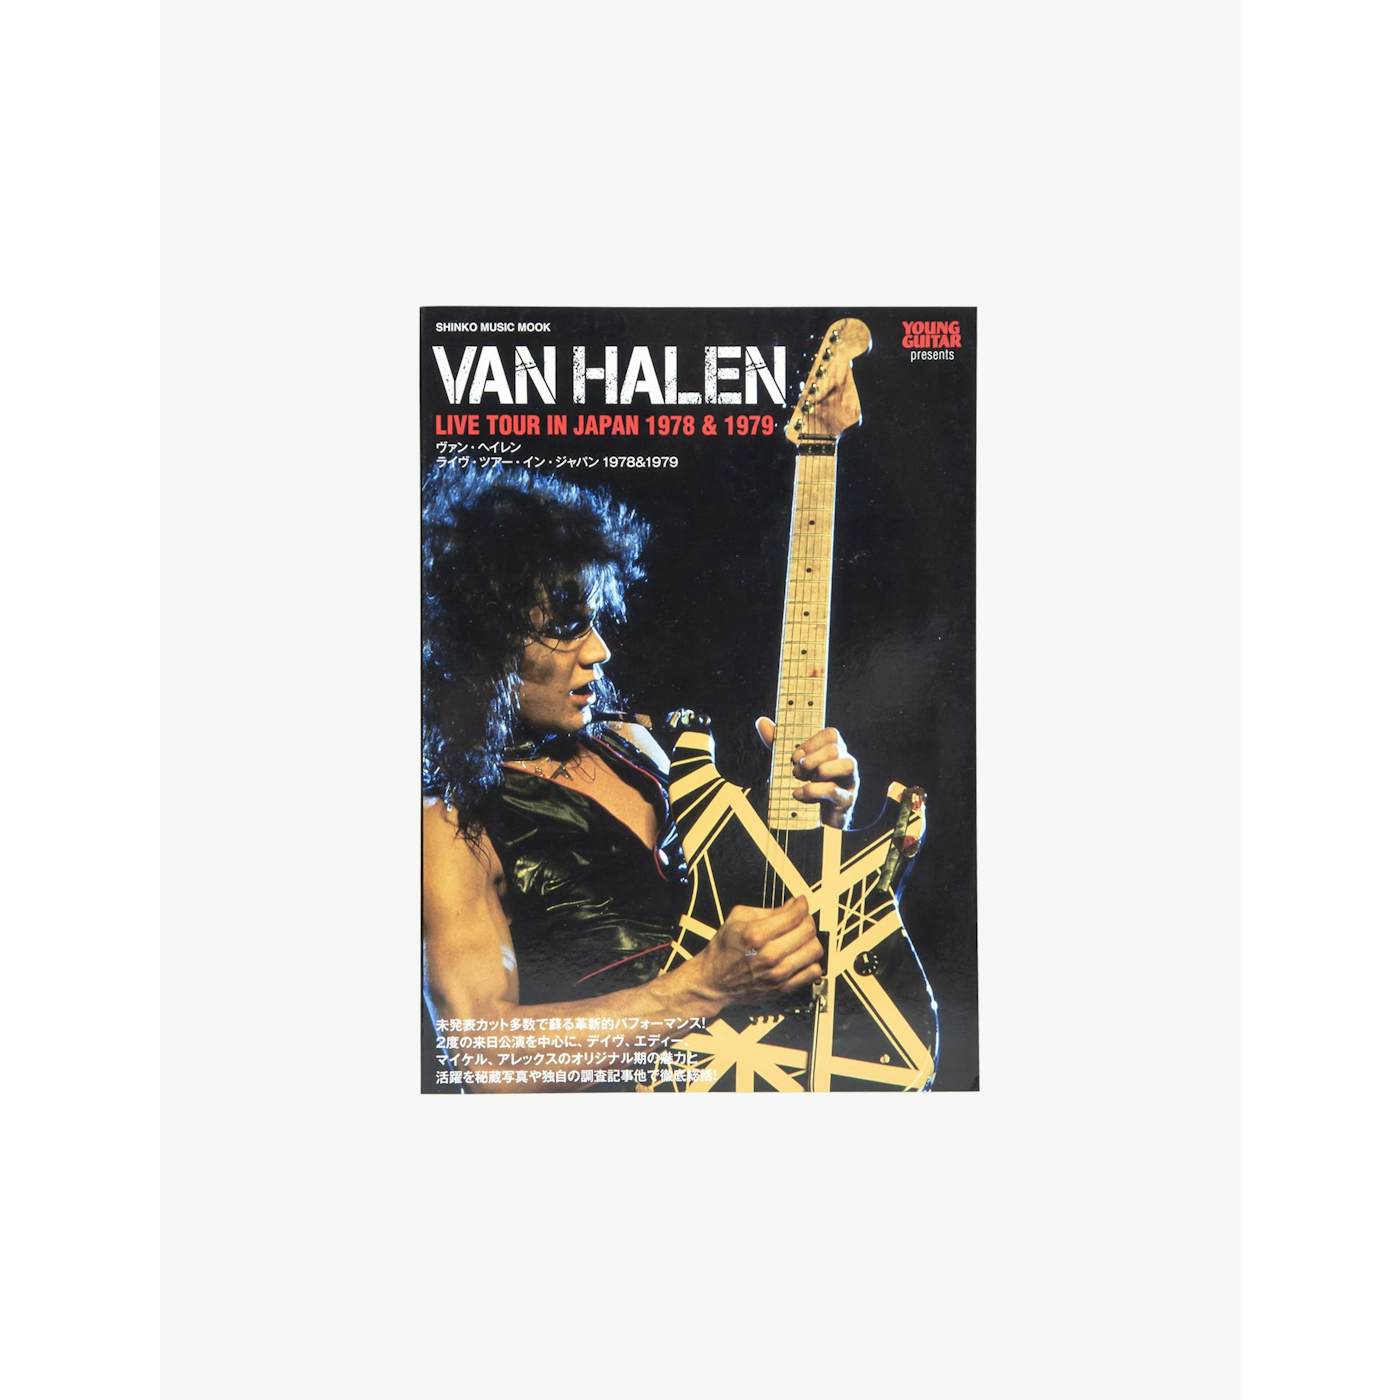 Eddie Van Halen EVH Live Tour in Japan 1978 & 1979 Photobook